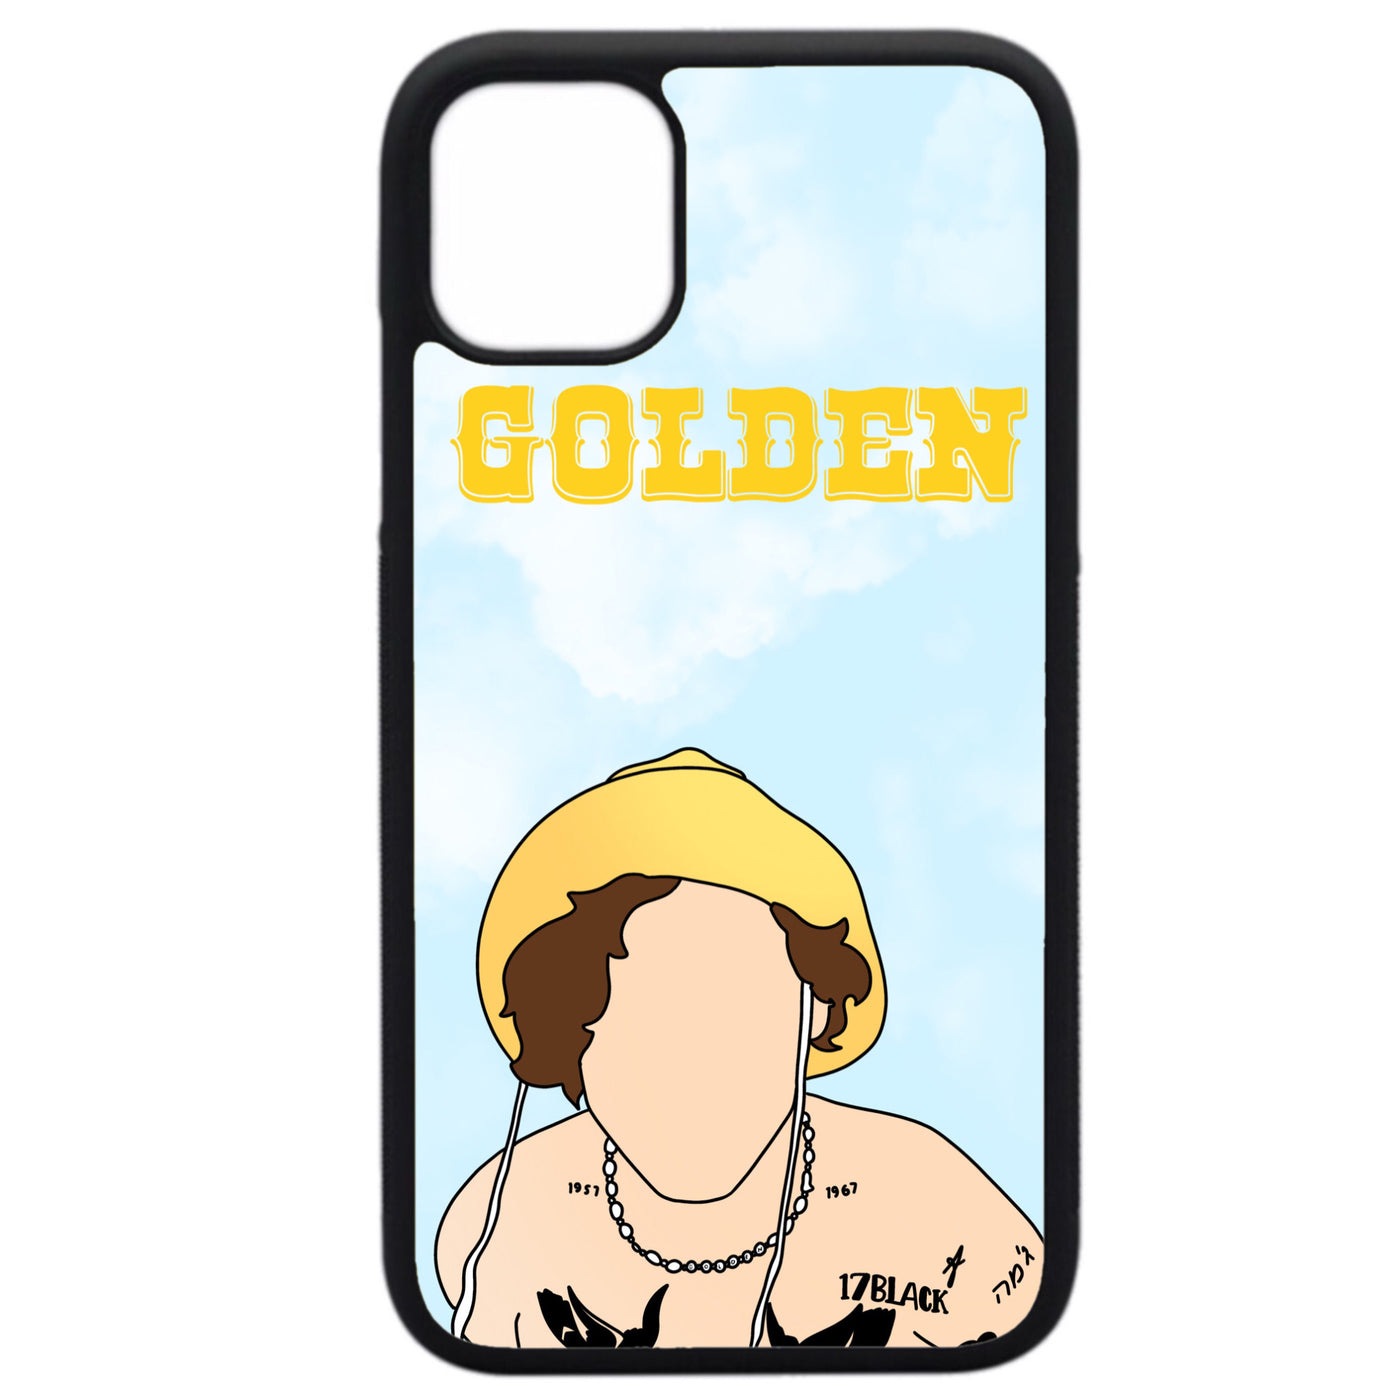 GOLDEN case